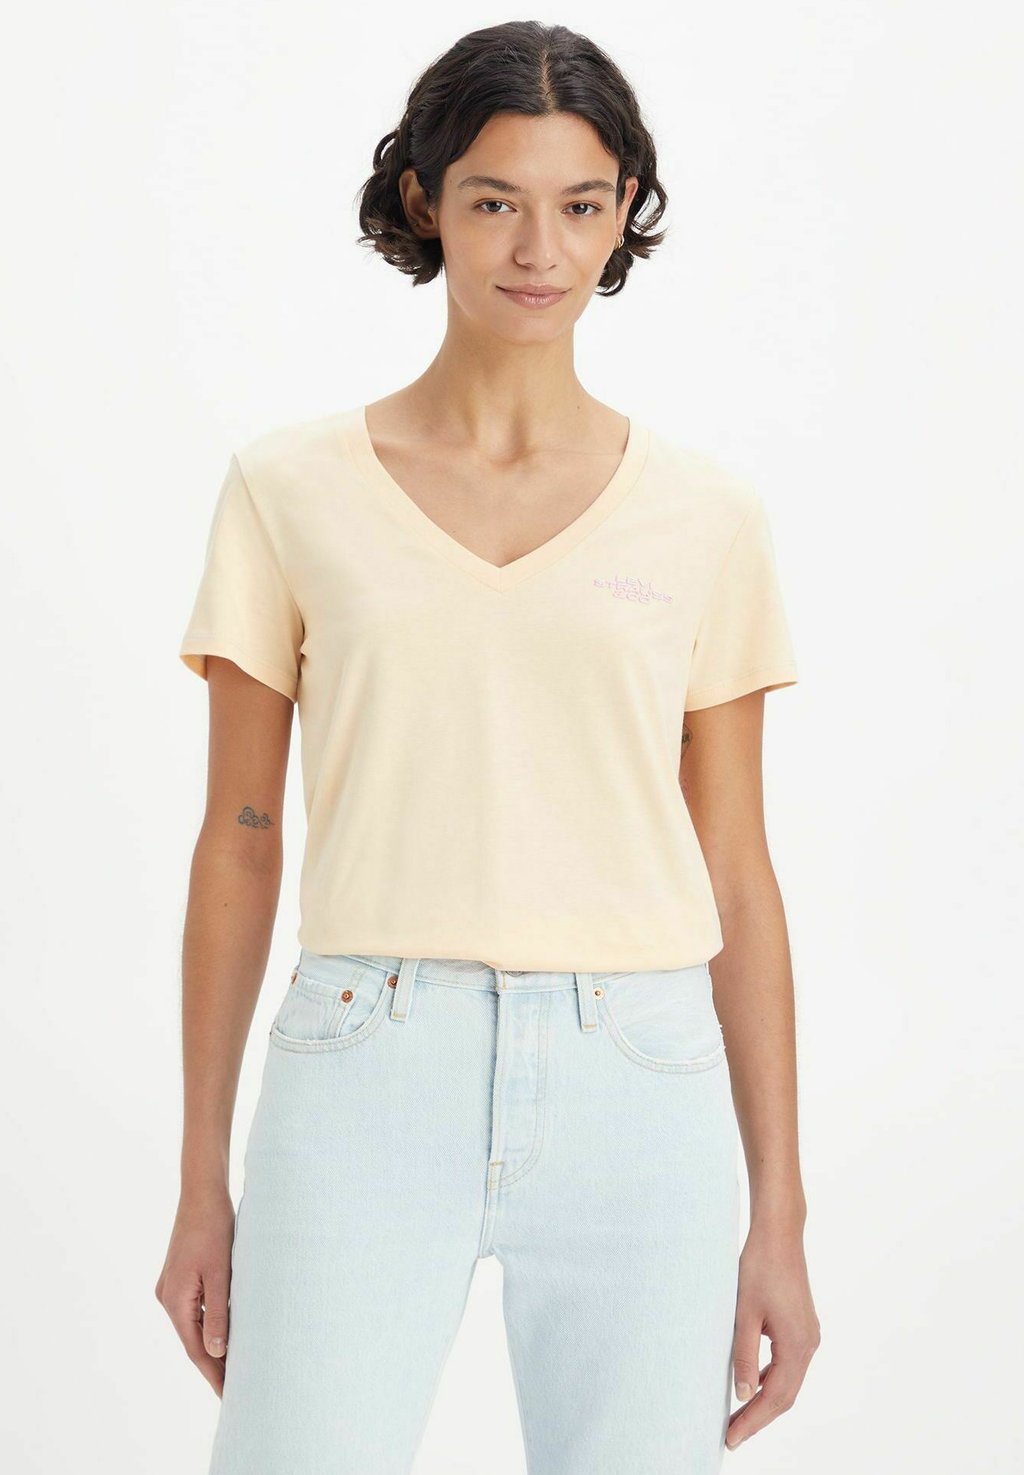 Базовая футболка GRAPHIC PERFECT VNECK Levi's, бежевый футболка levi´s graphic perfect vneck желтый